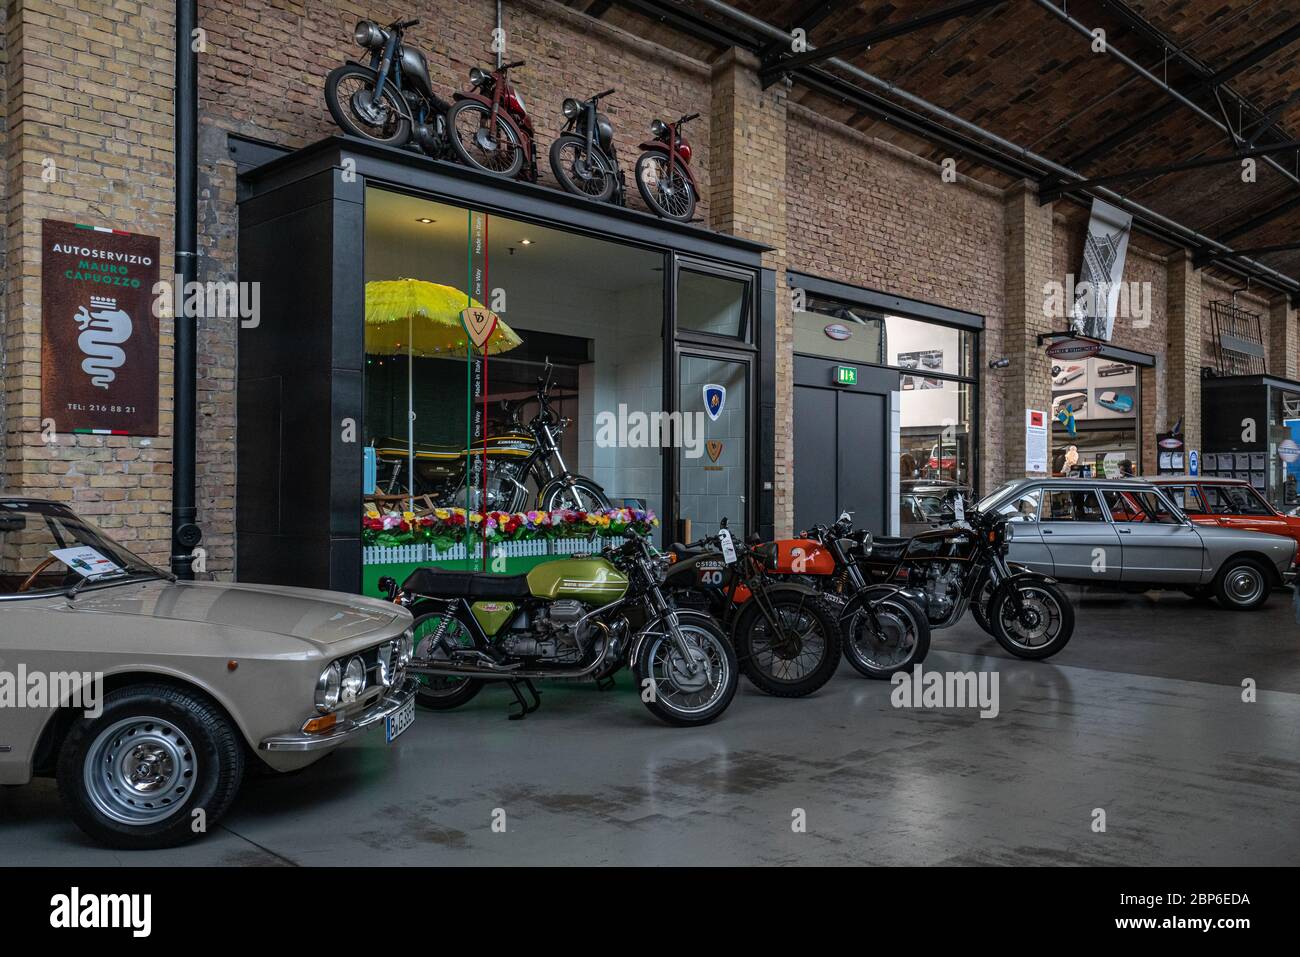 Oldtimer garage motorrad -Fotos und -Bildmaterial in hoher